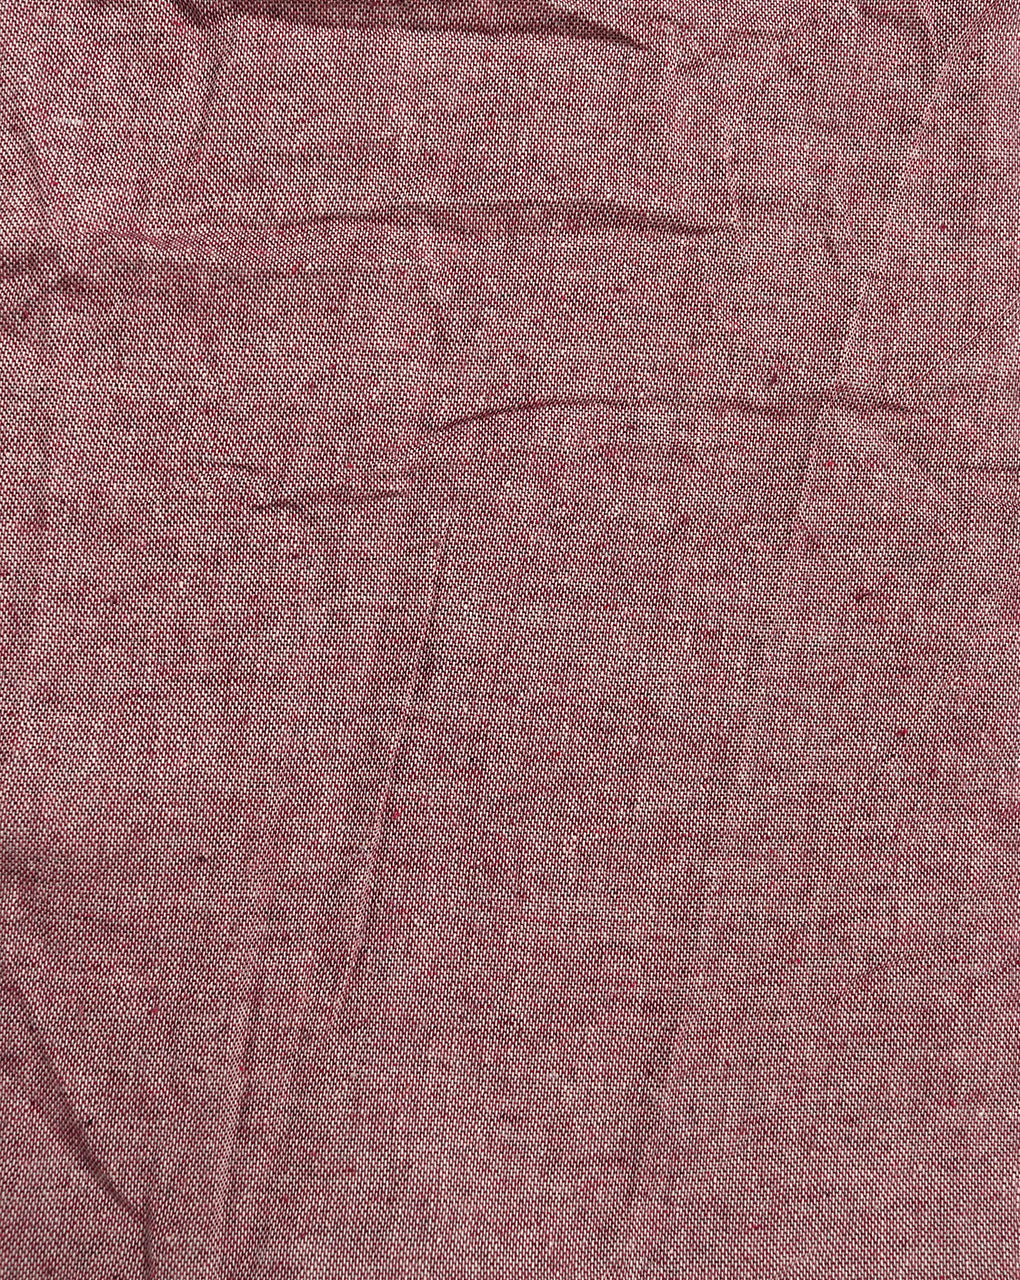 Maroon Chambray Slub Cotton Fabric